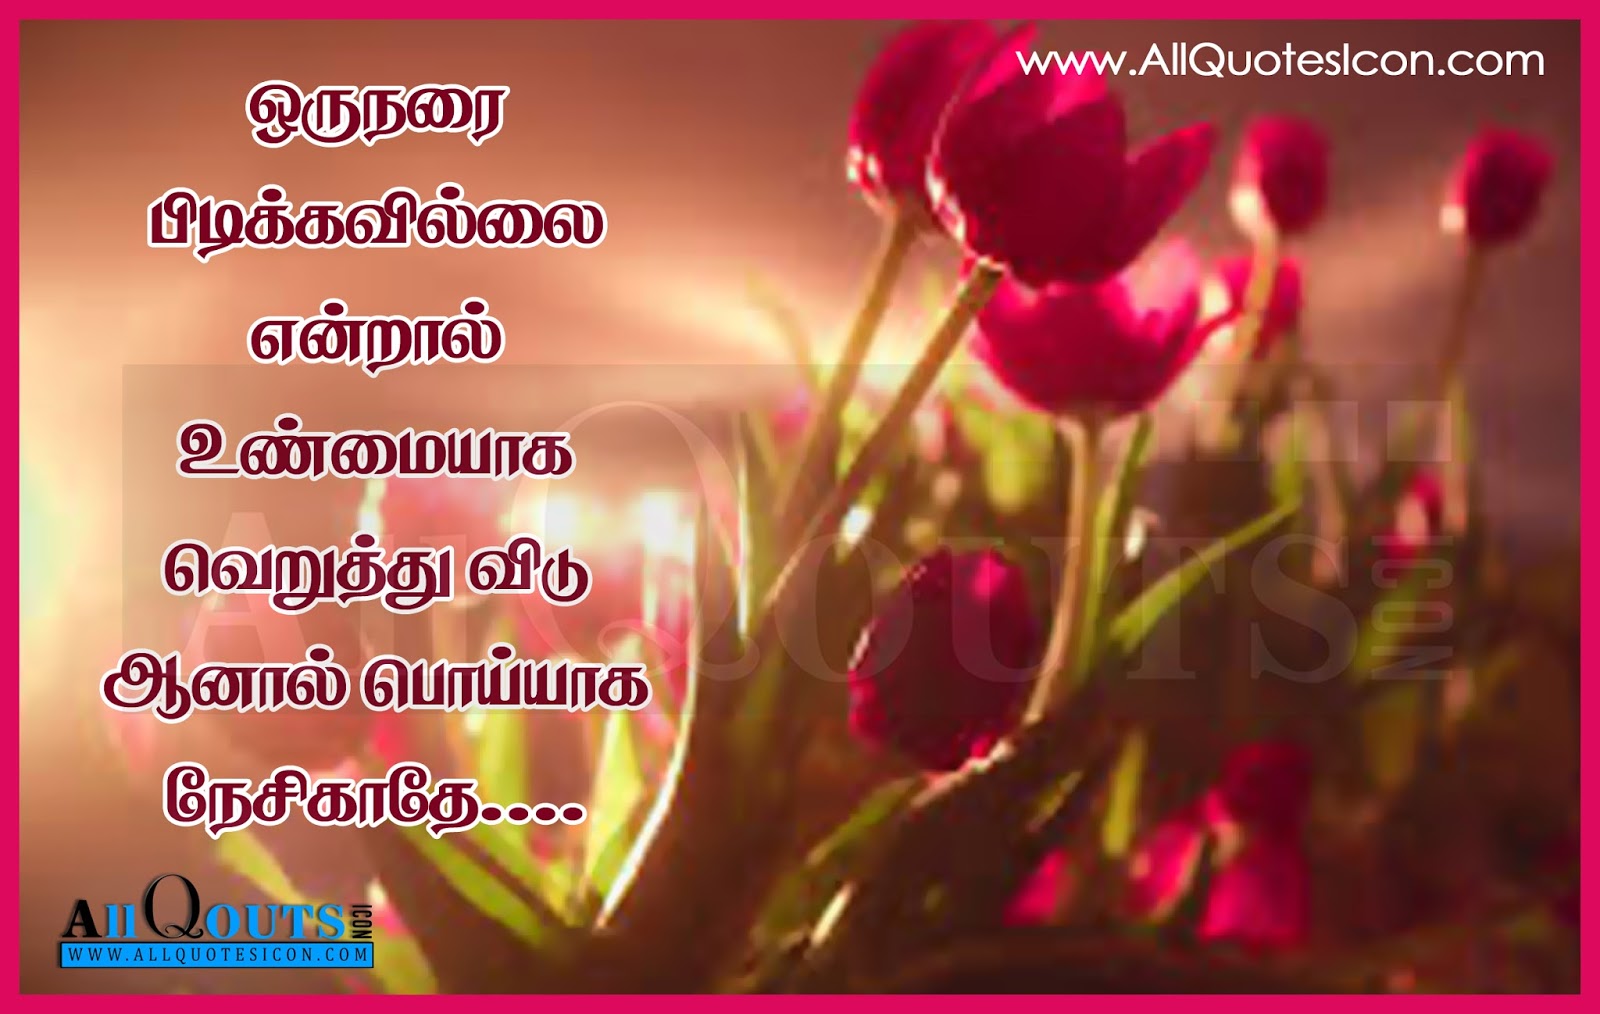 Imagenes De Inspiration Quotes Images In Tamil